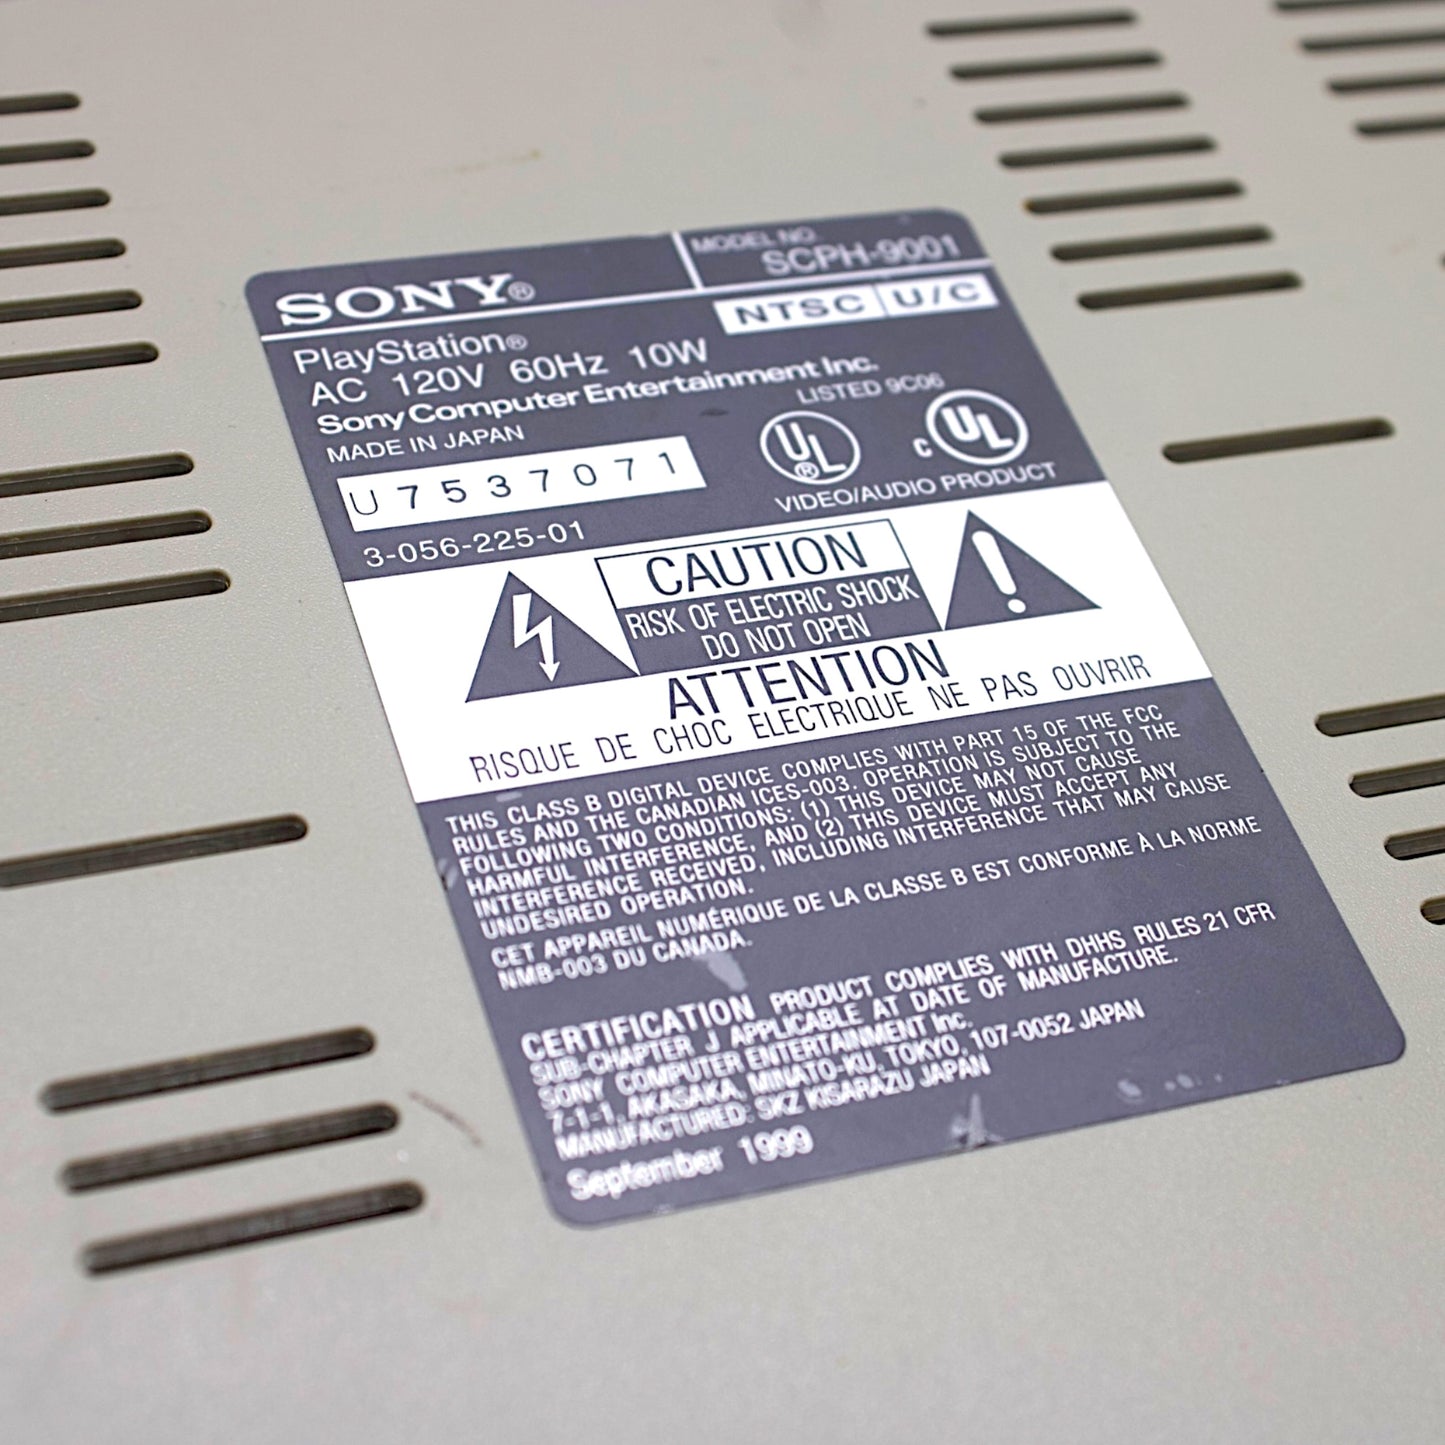 Sony PlayStation (Sony Computer Entertainment, 1994)